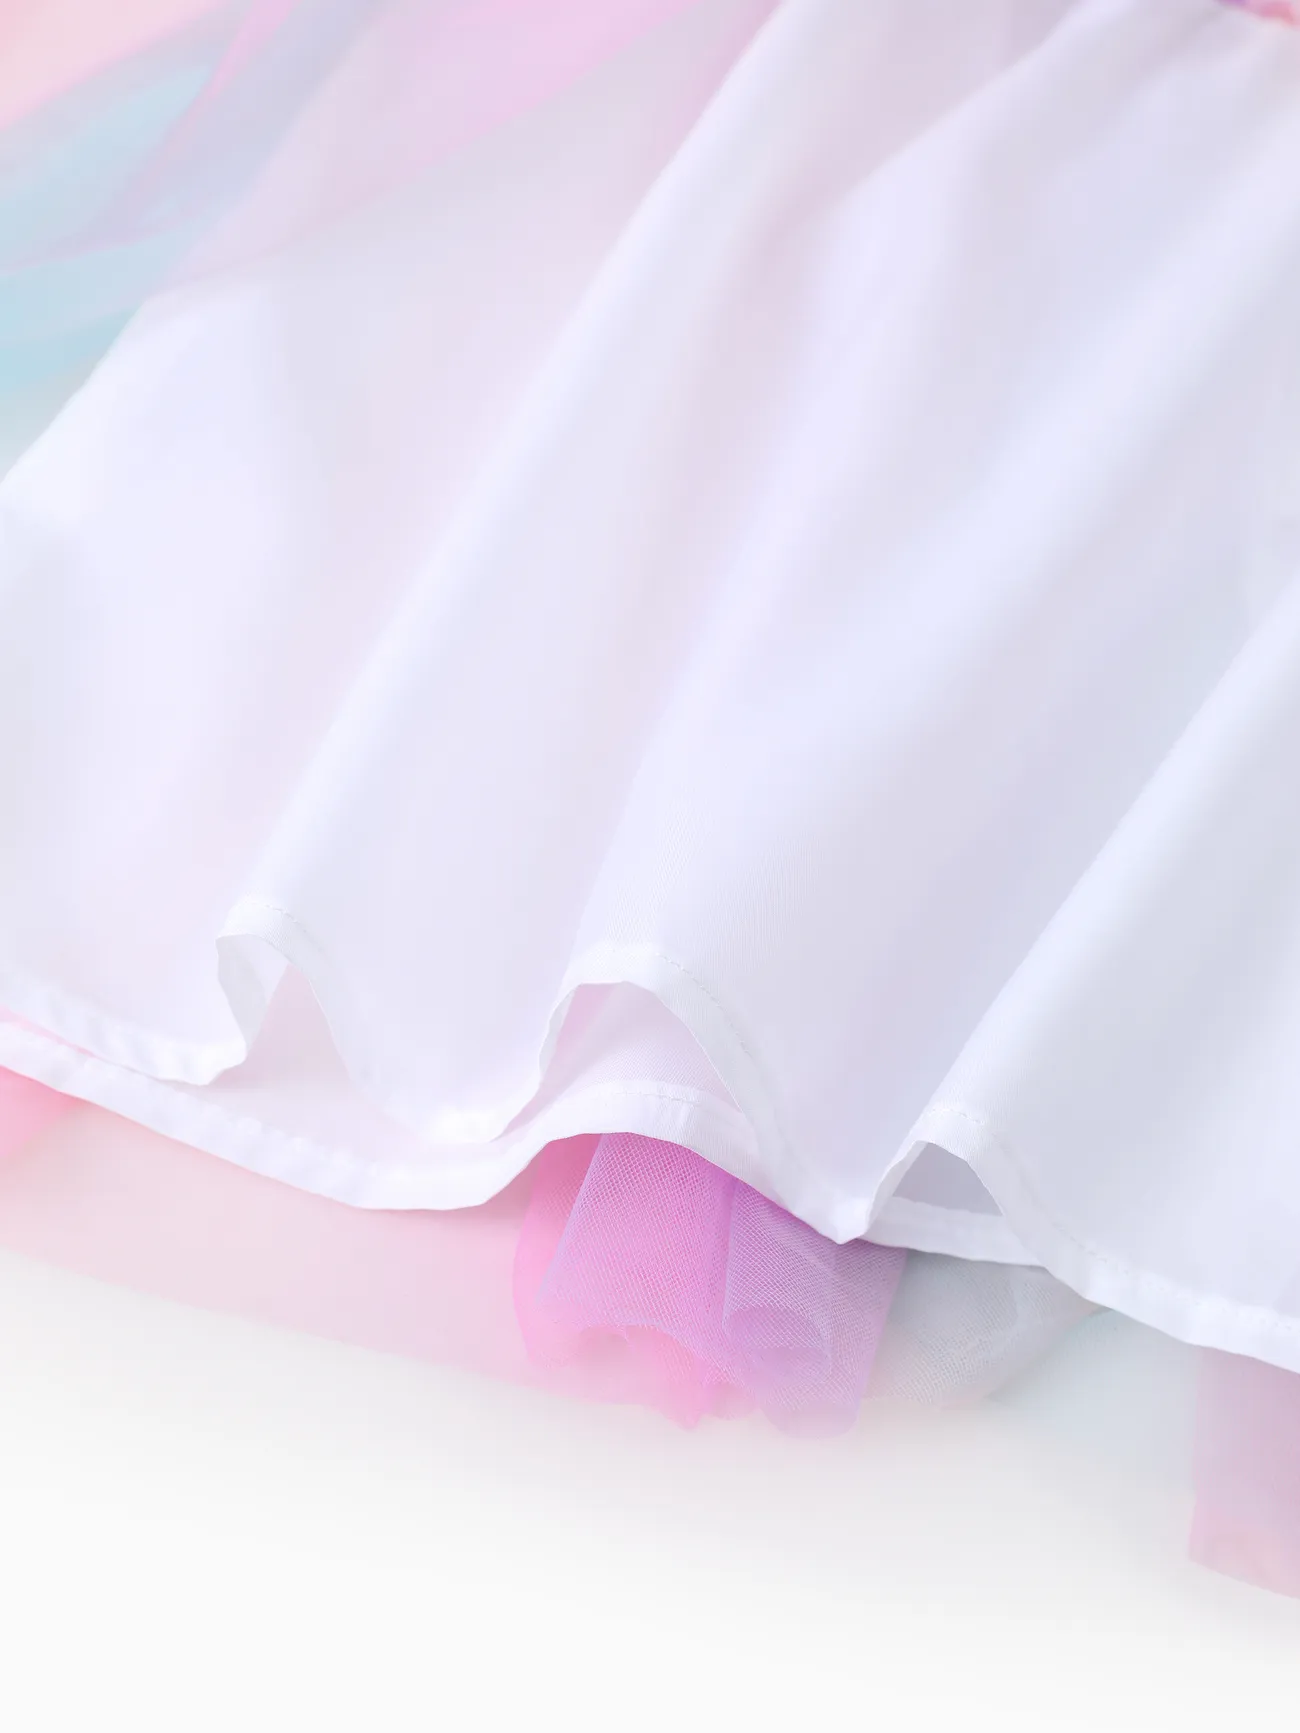 Care Bears Toddler/Kids Girls 1pc Character Print Sequin Mesh Sleeveless Dress Multi-color big image 1